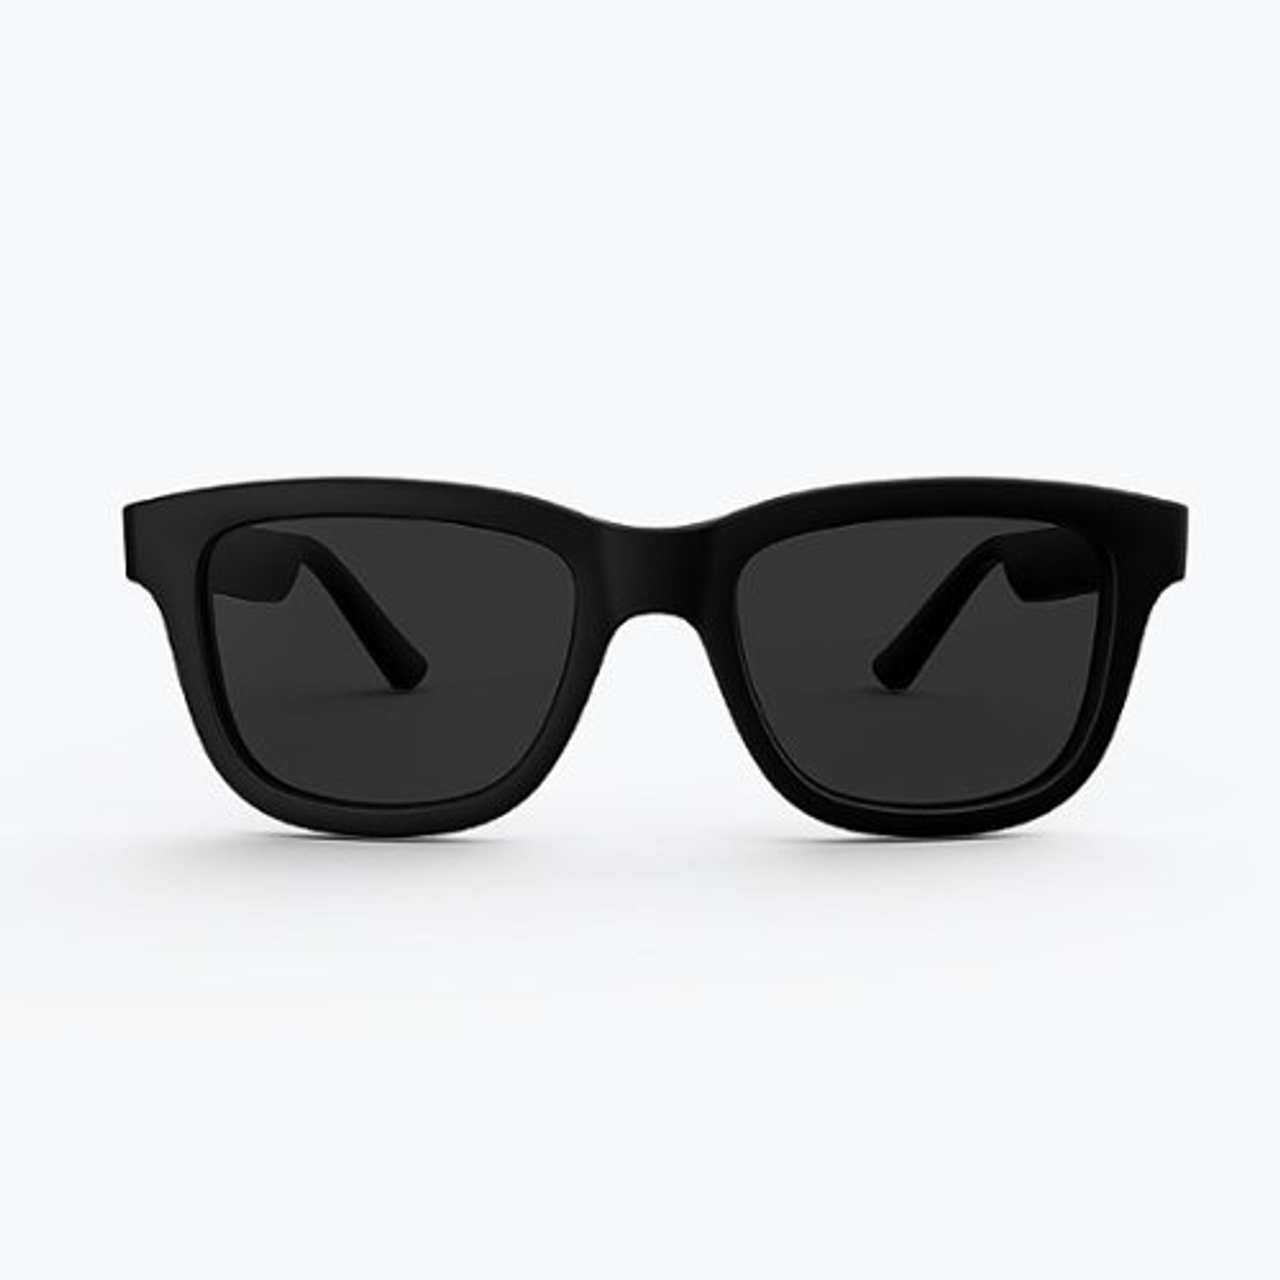 Ampere - Dusk Sunglasses Wayfarer Lite Outdoor Lens - Black